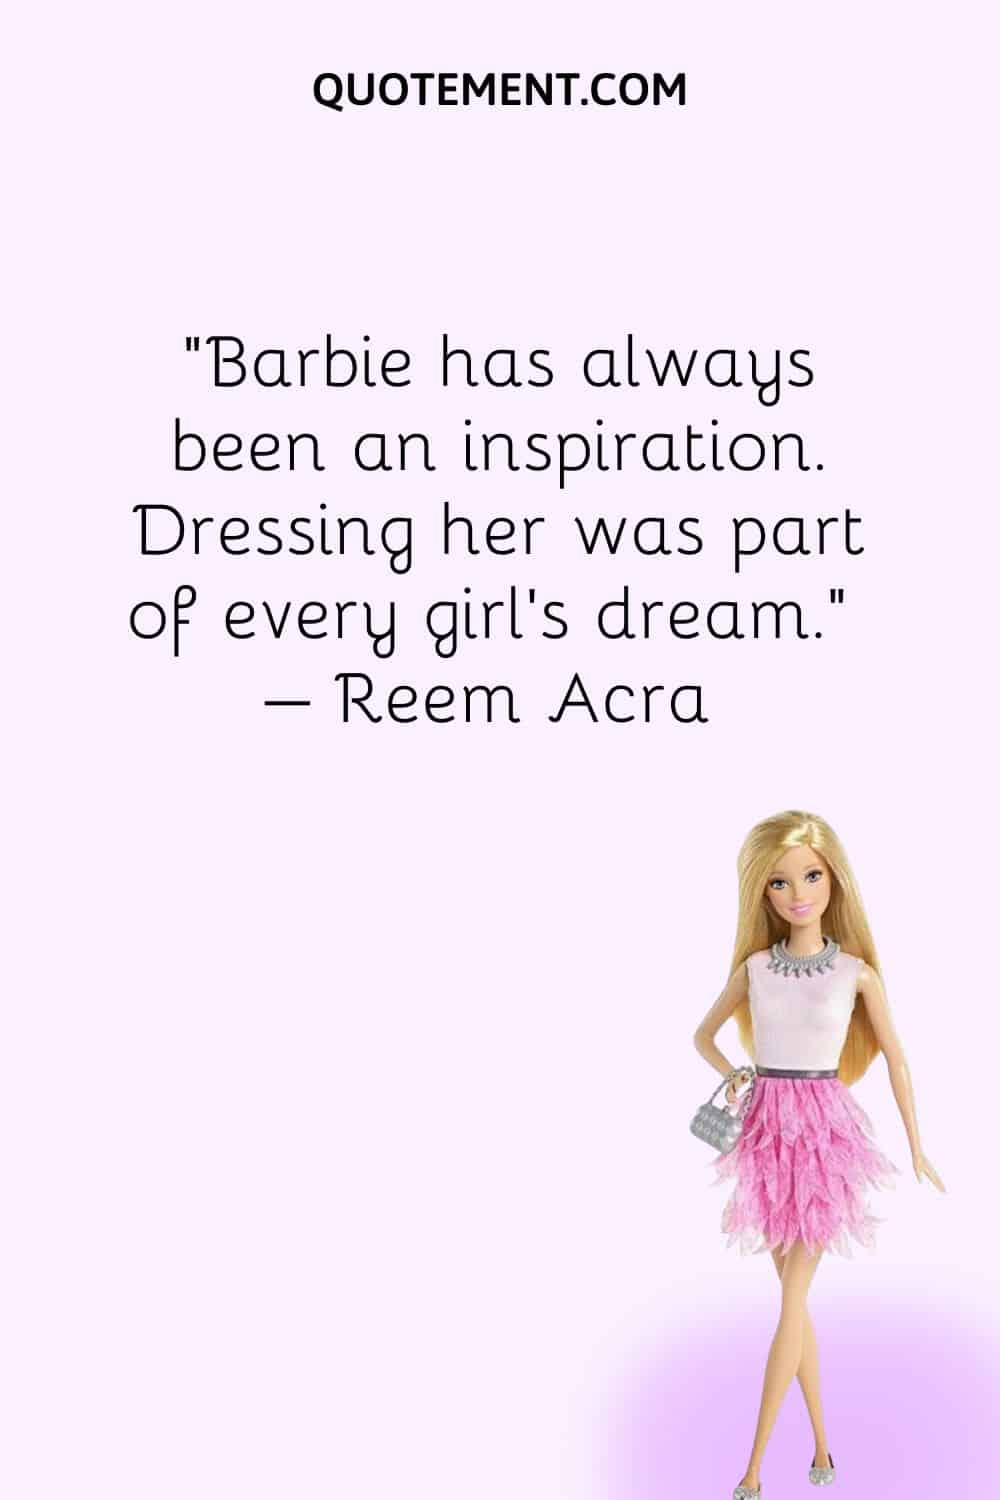 Barbie has always been an inspiration